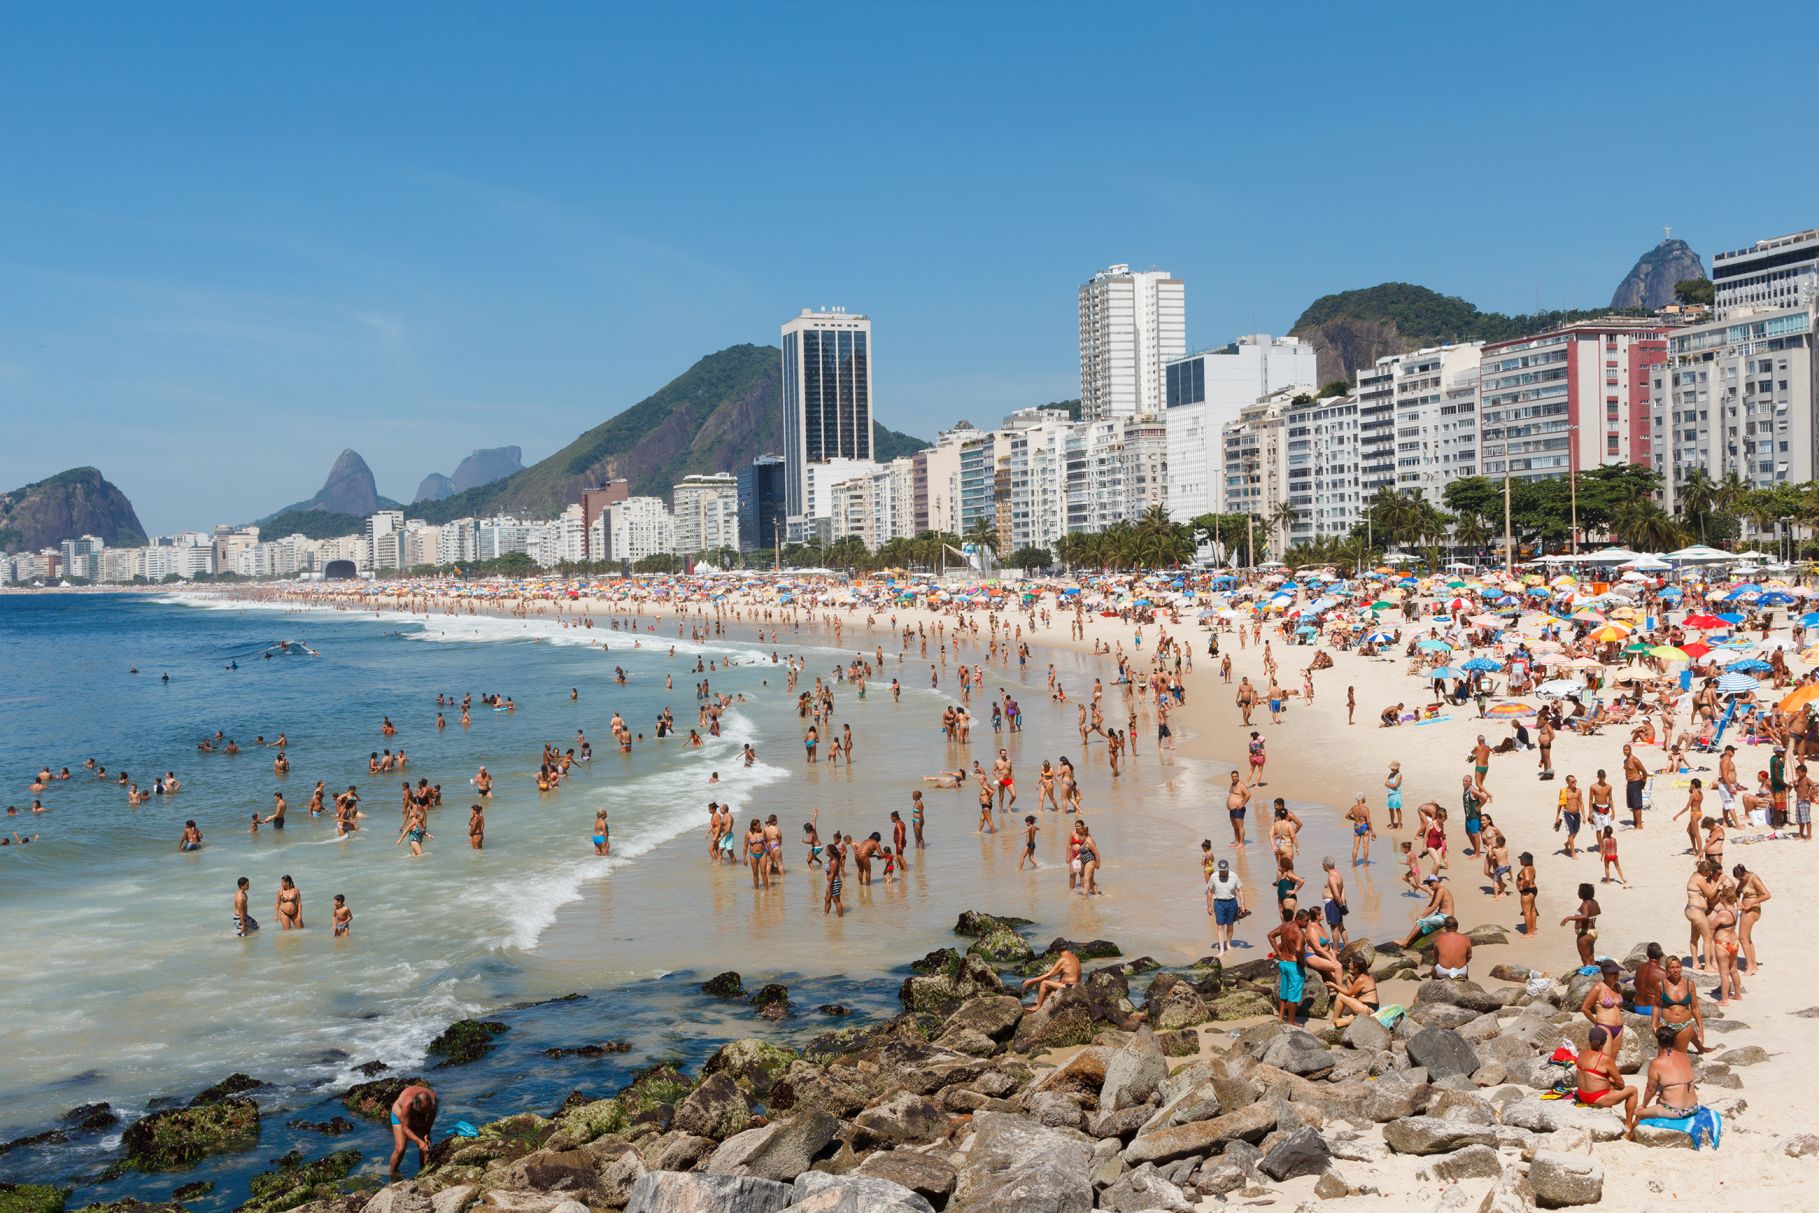 La célèbre plage de Copacabana.